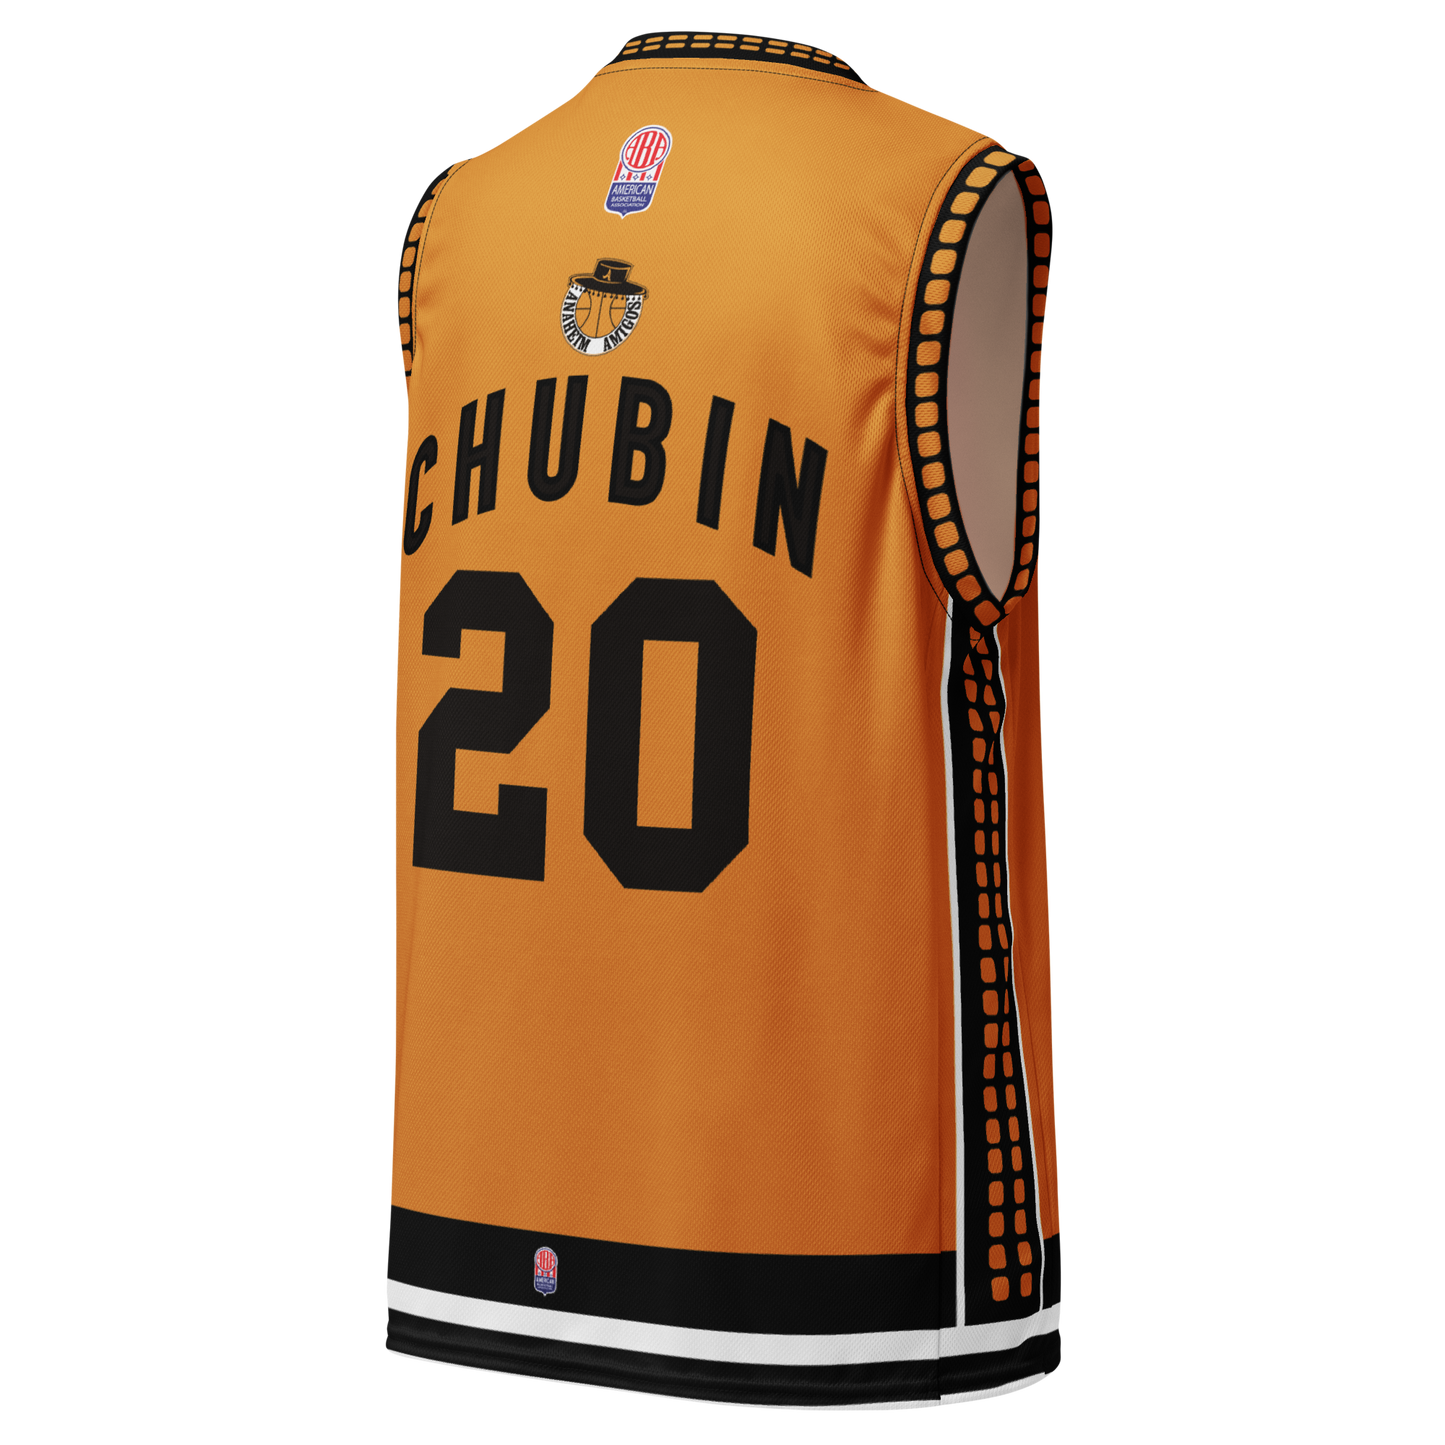 Introducing the Stephen "Chube" Chubin Exclusive #20 Jersey!